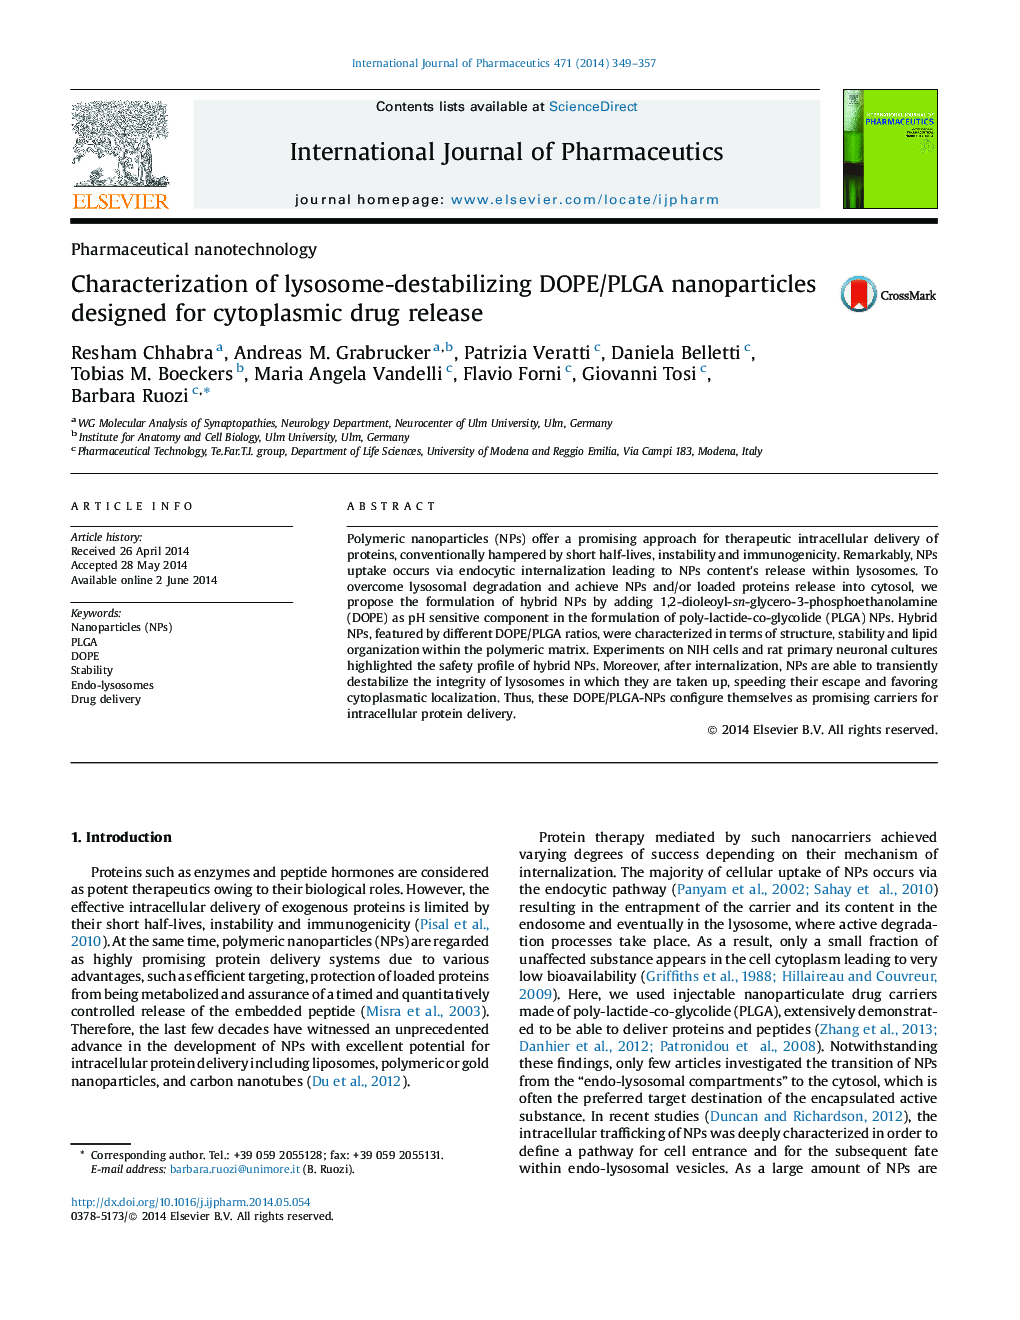 Characterization of lysosome-destabilizing DOPE/PLGA nanoparticles designed for cytoplasmic drug release